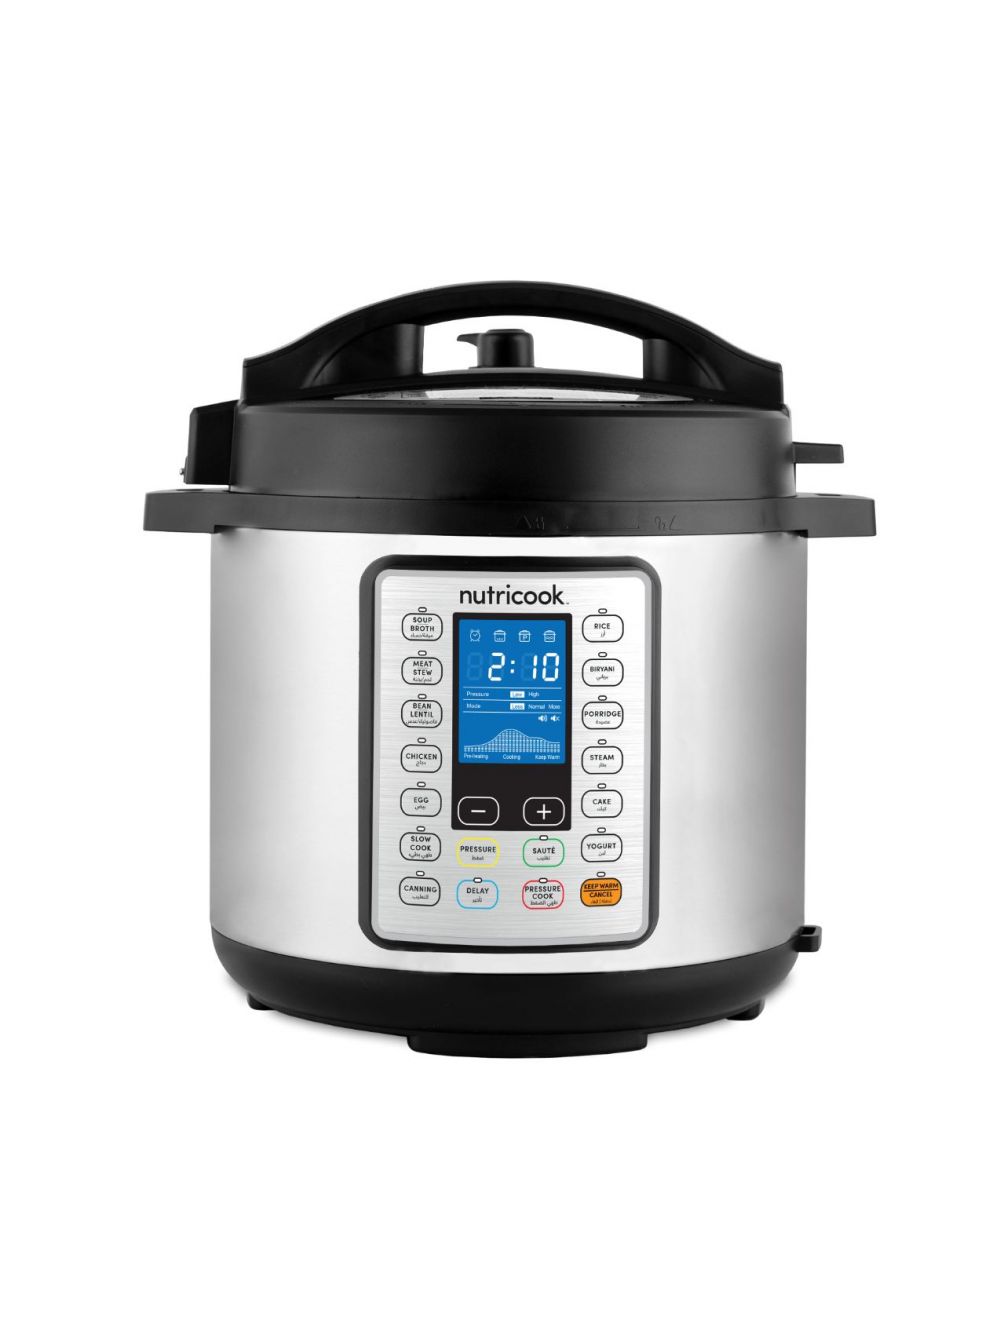 Nutricook Smart Pot Prime 10-in-1 Multi-use Pressure Cooker, 6L, 1000 Watts, Silver/Black-NC-SPPR6